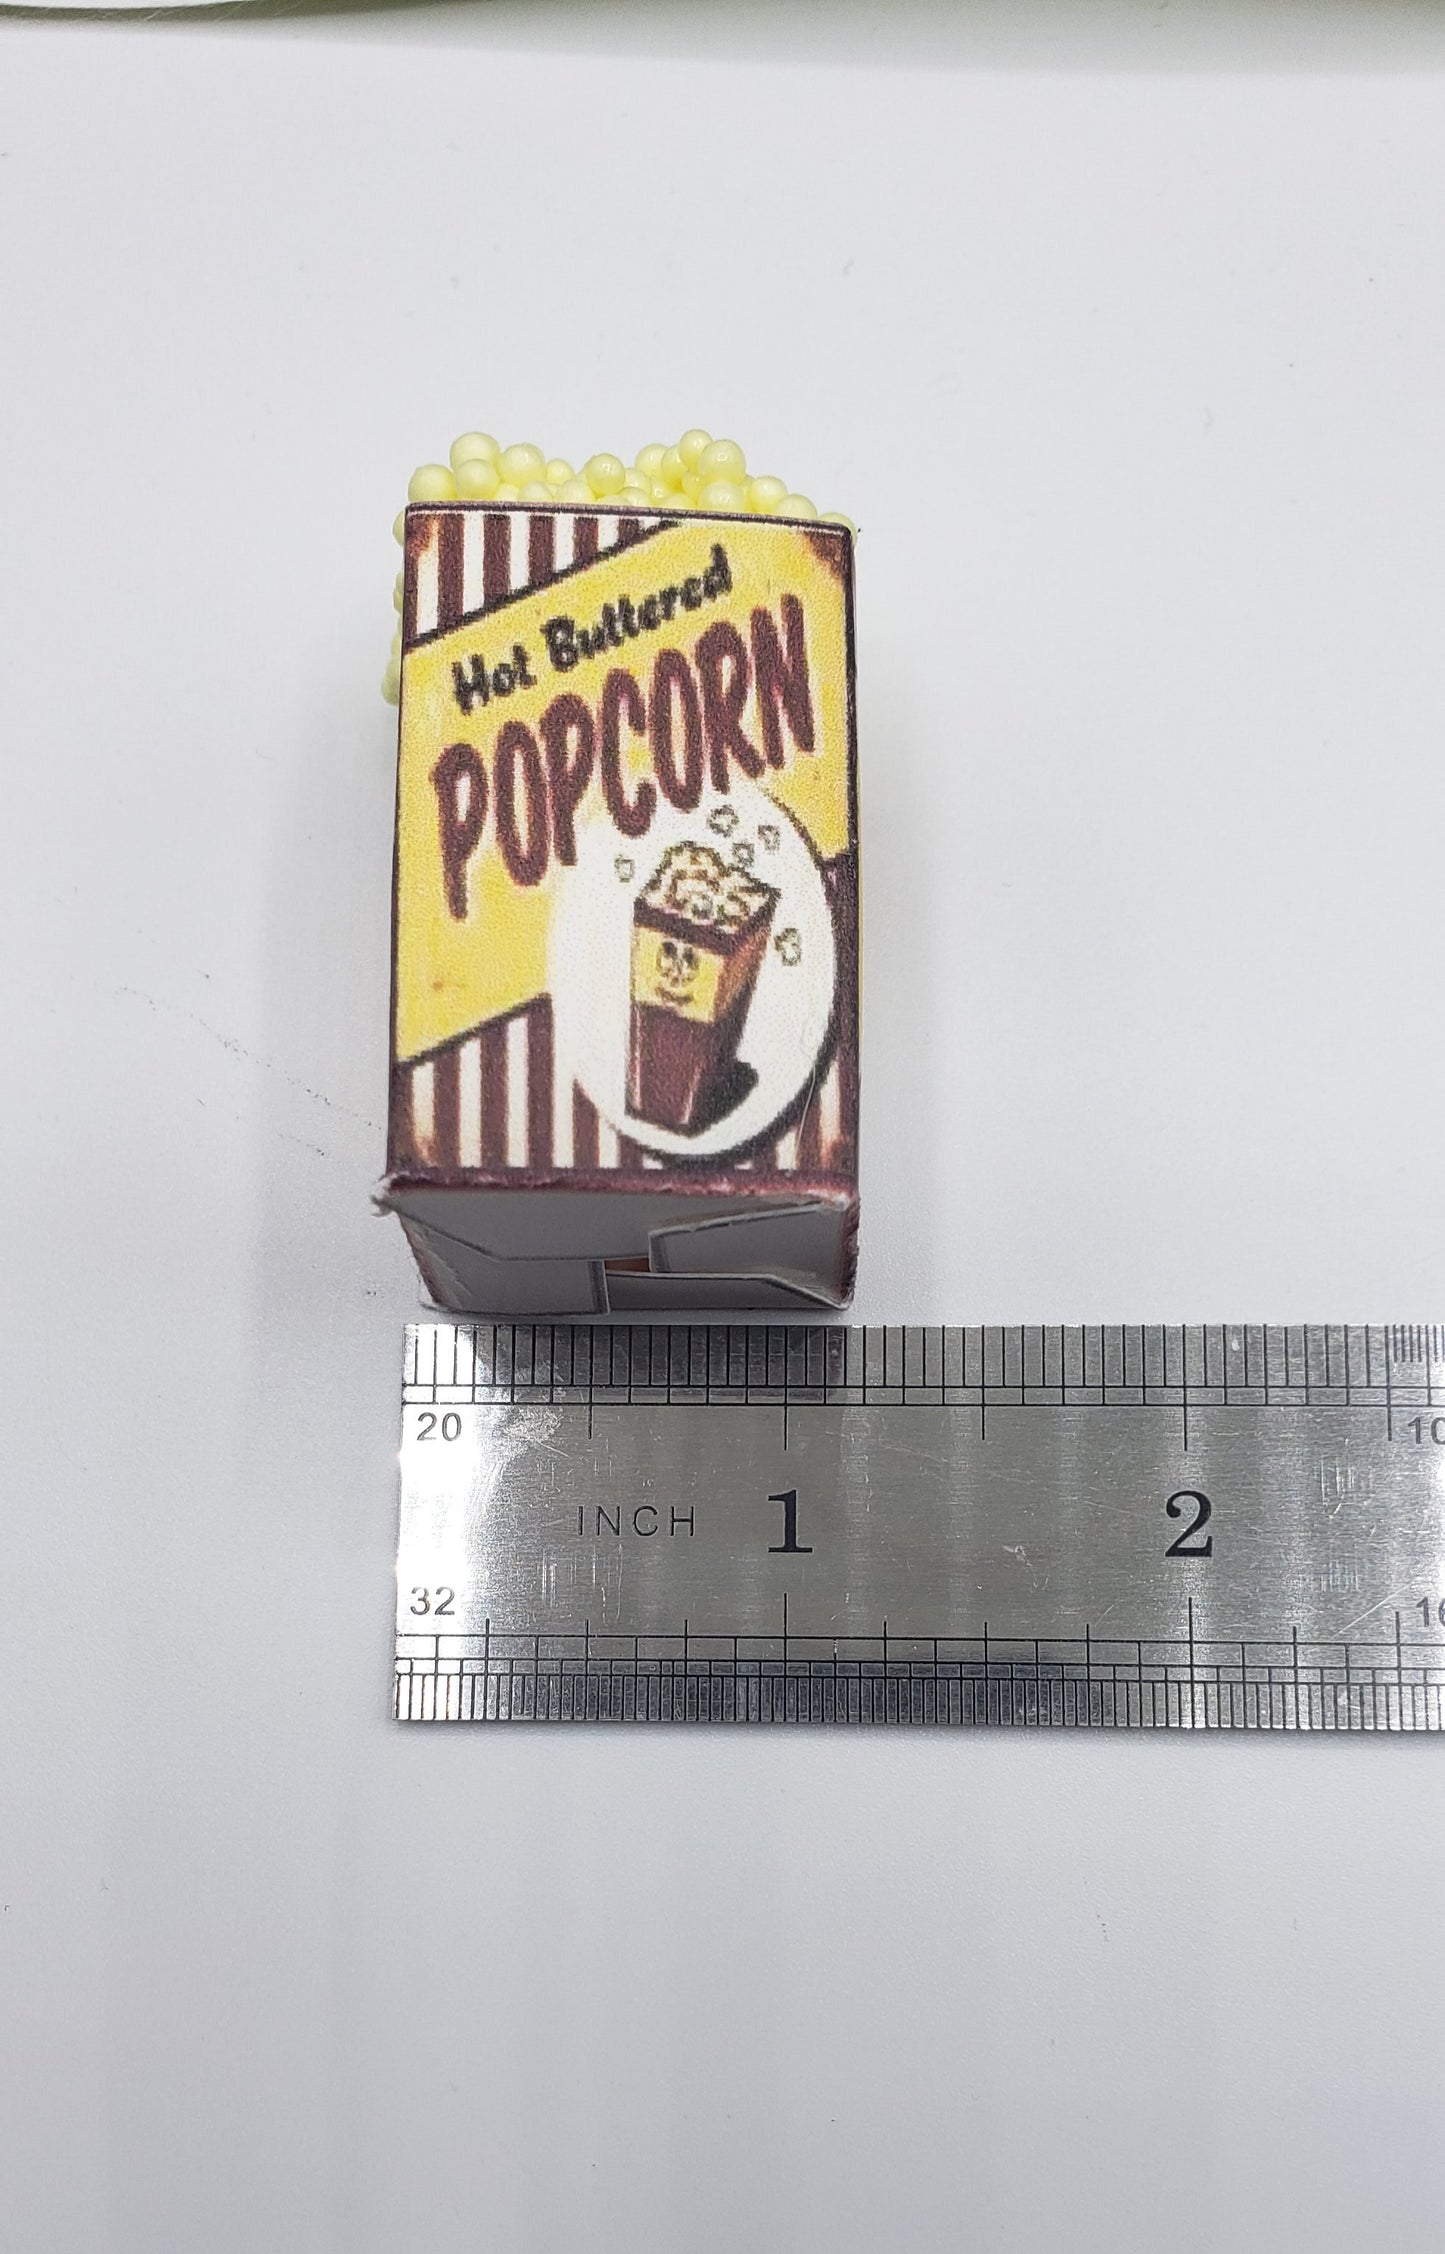 Base of popcorn box